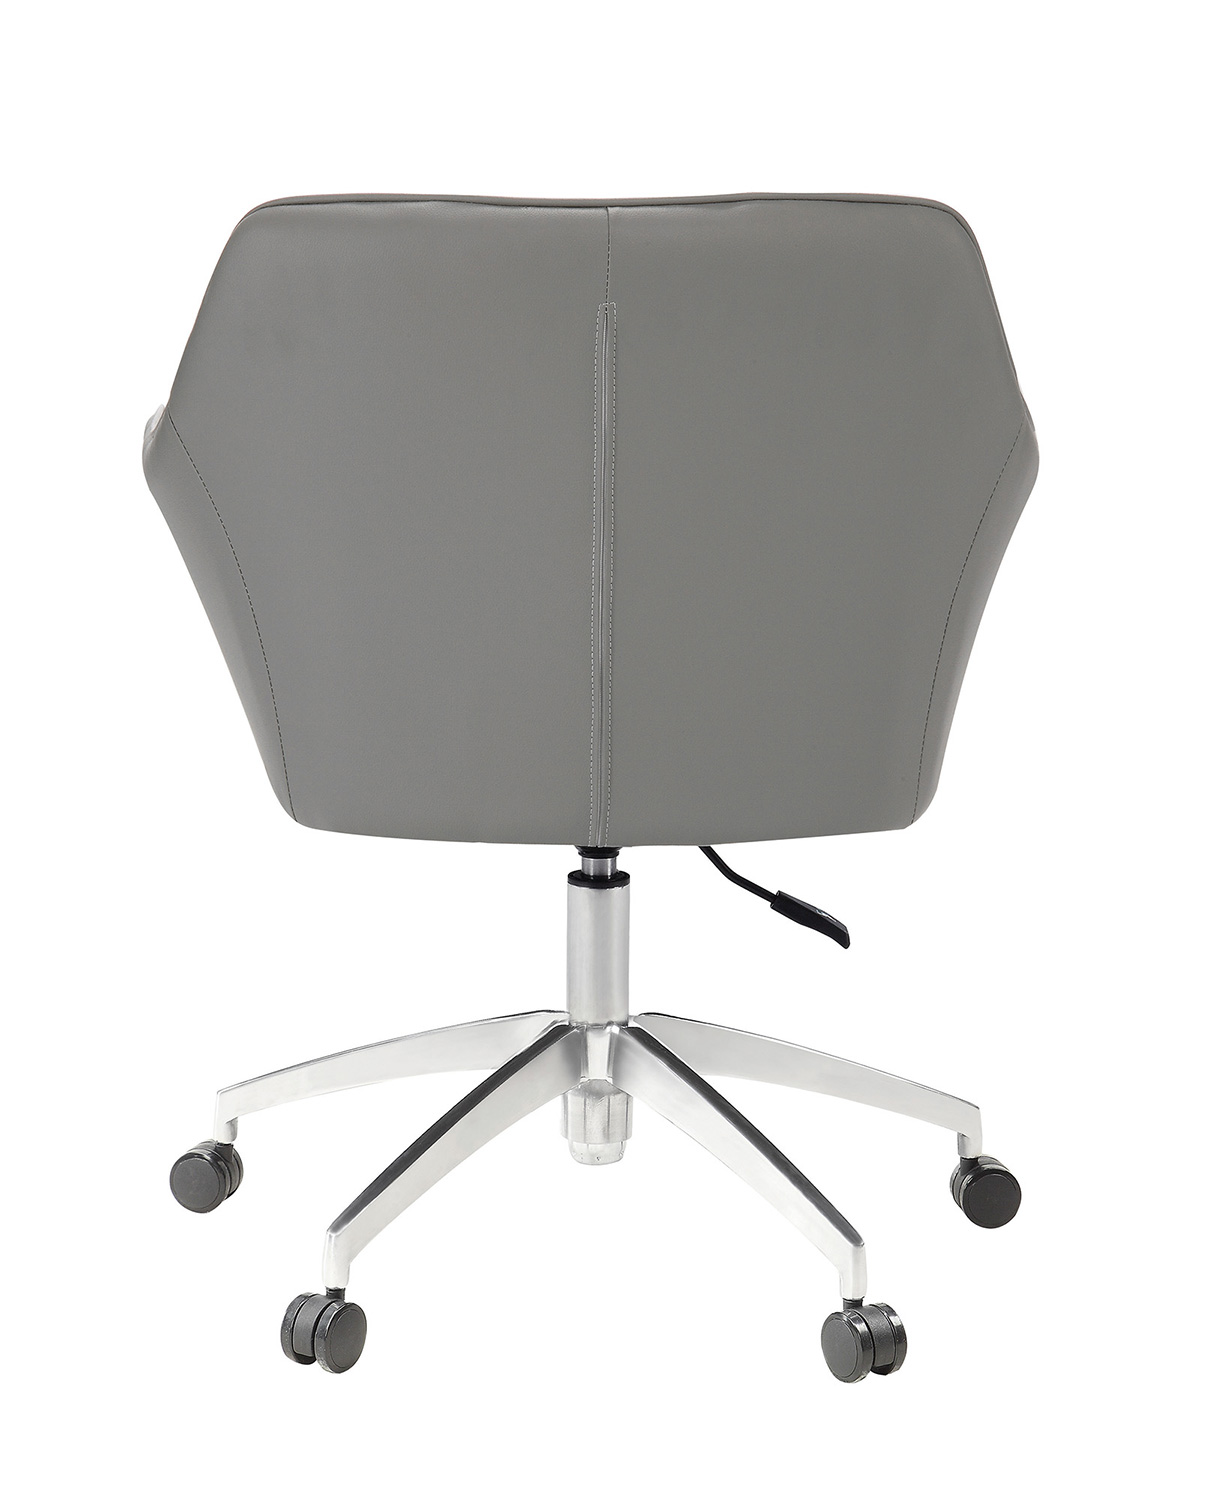 Coaster 801538 Office Chair - Grey/Aluminum